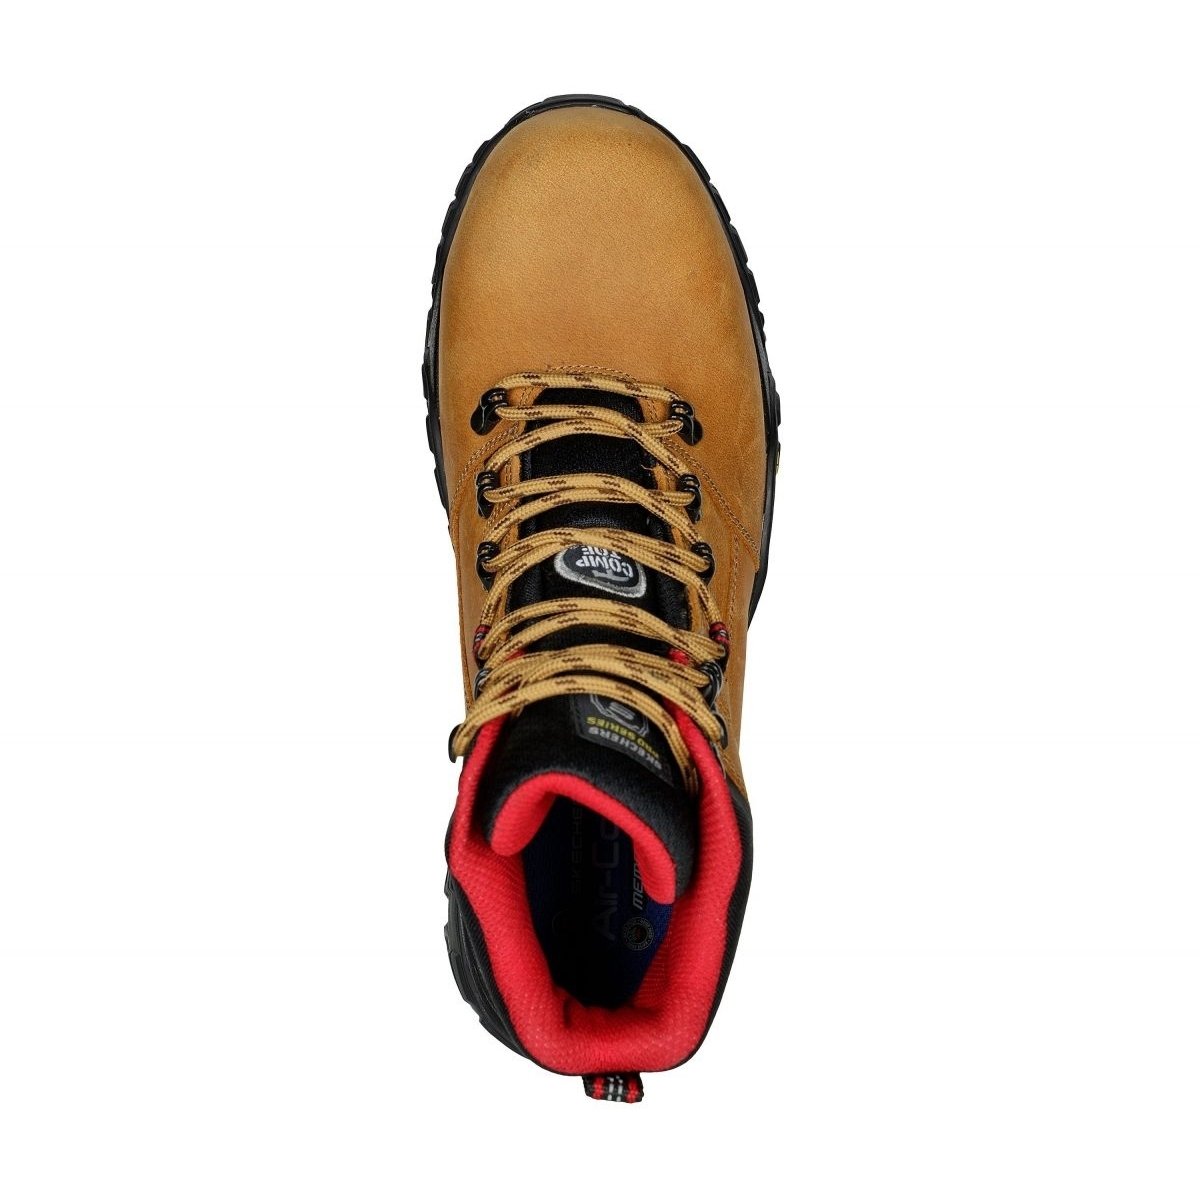 Skechers Men's, Treadix Goodyear Comp Toe Work Boot BROWN - Tan, 9.5